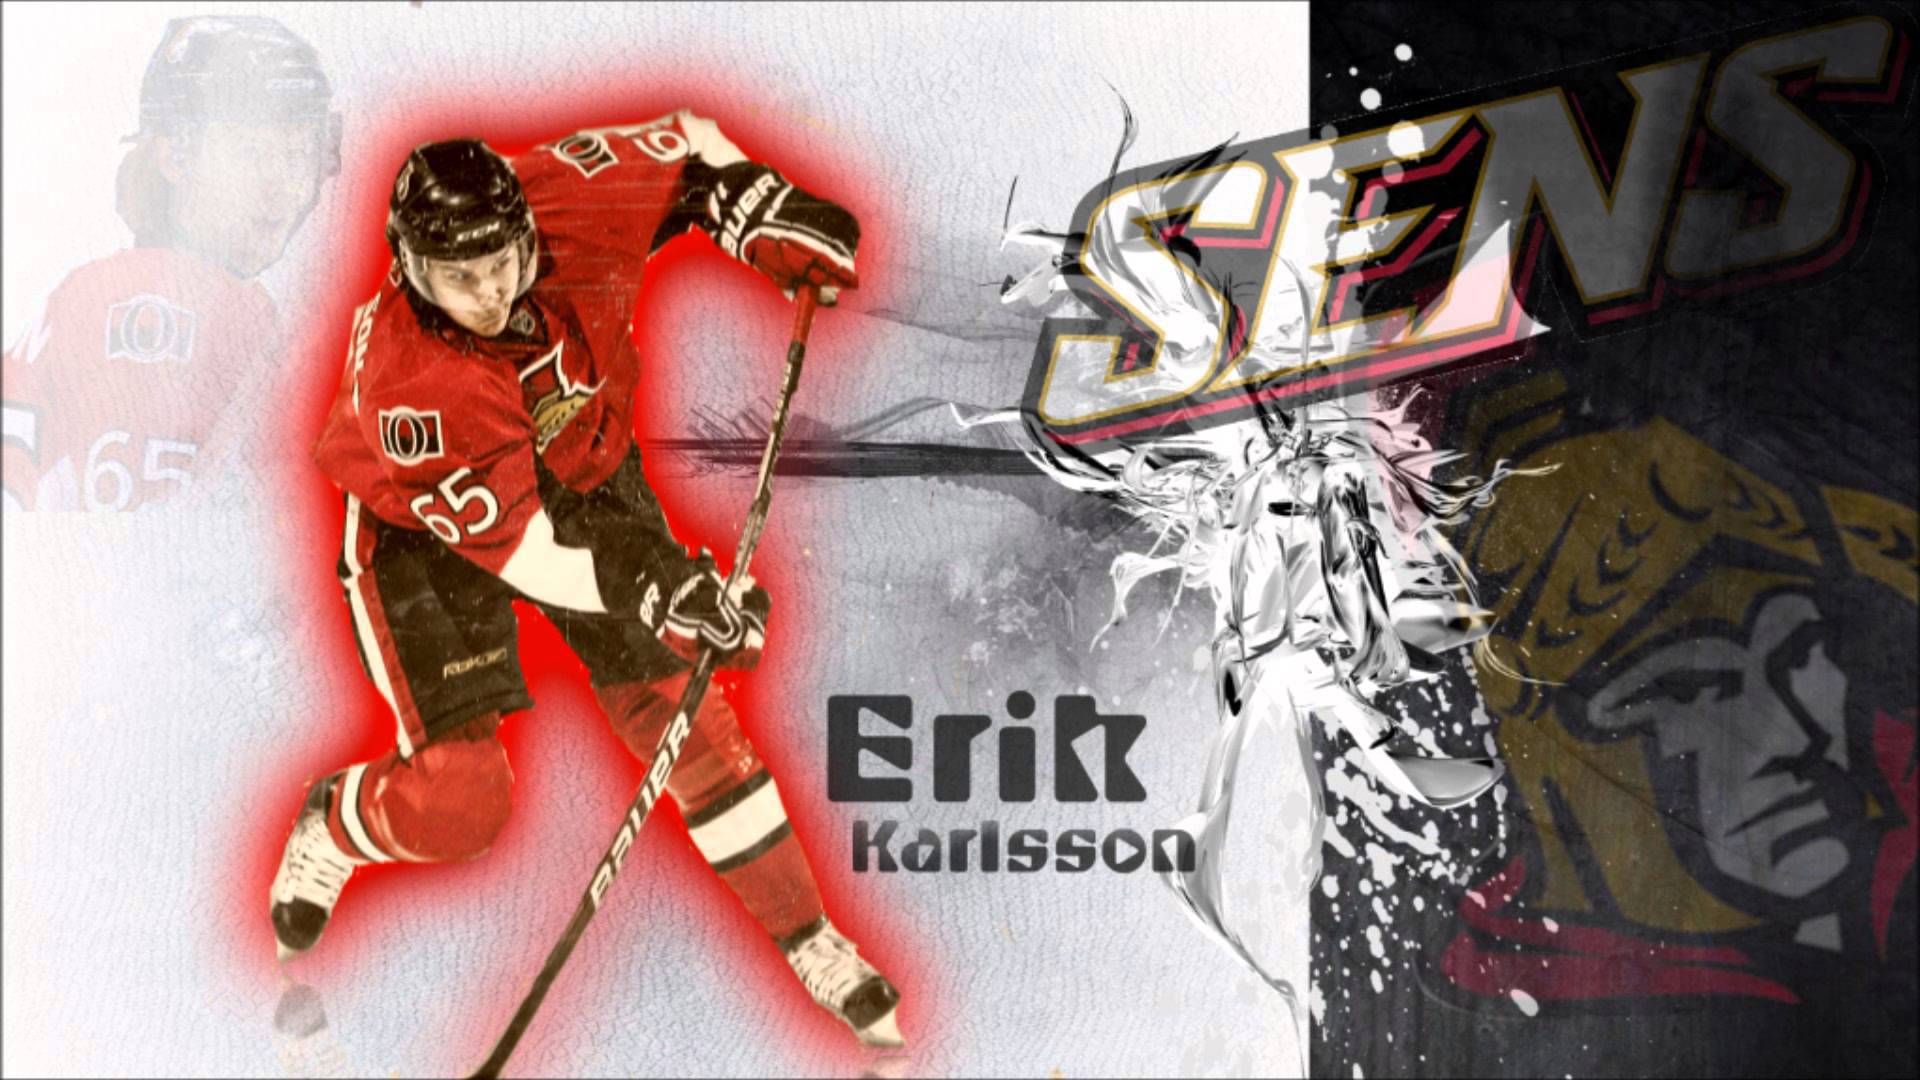 Famous NHL player Erik Karlsson wallpaper and image